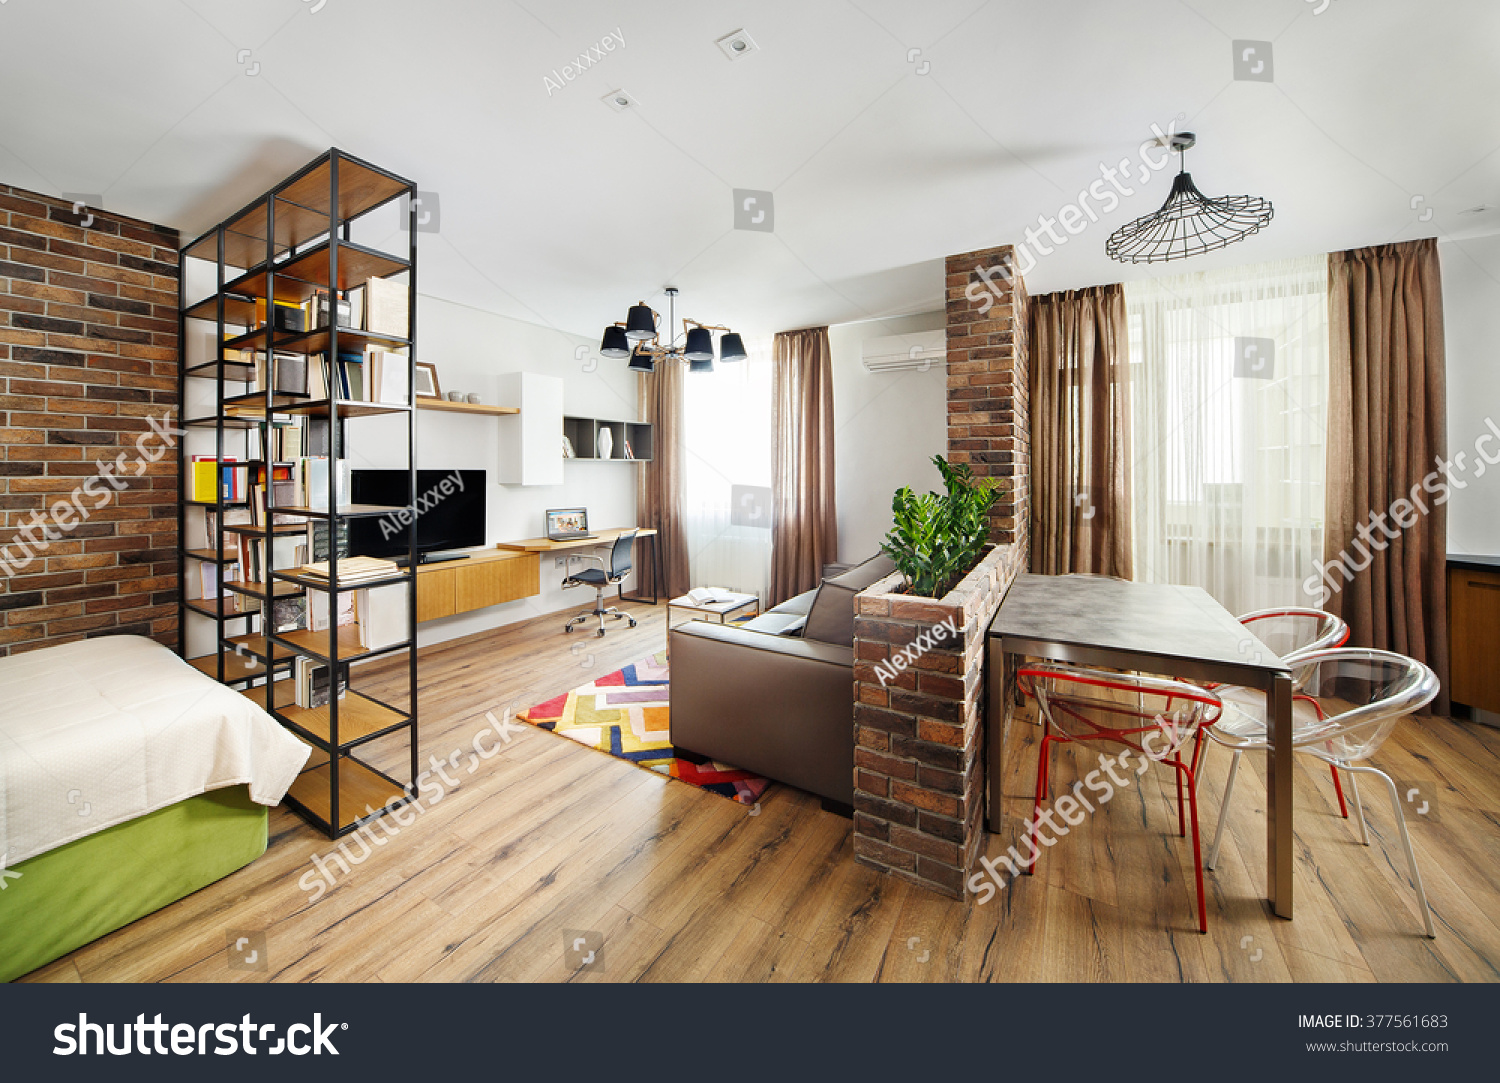 Interior studio apartments, with bookshelves and hardwood floors. #377561683